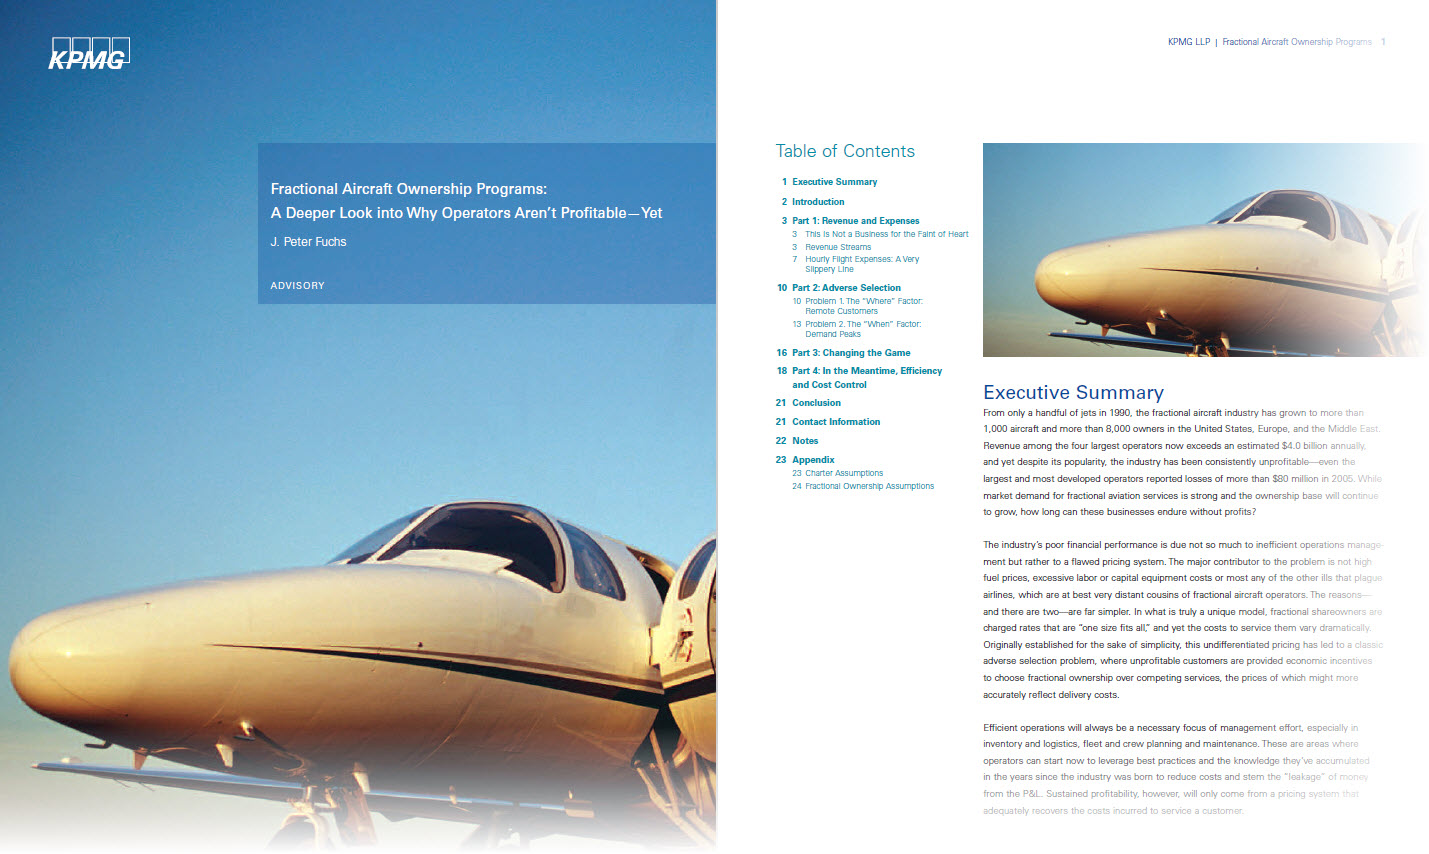 Eine interessante KPMG-Studie über Fractional Ownership Modelle für Jets findet sich hier: https://www.irmi.com/docs/default-source/expert-commentary-documents/webster04-aircraft-ownership.pdf?sfvrsn=4